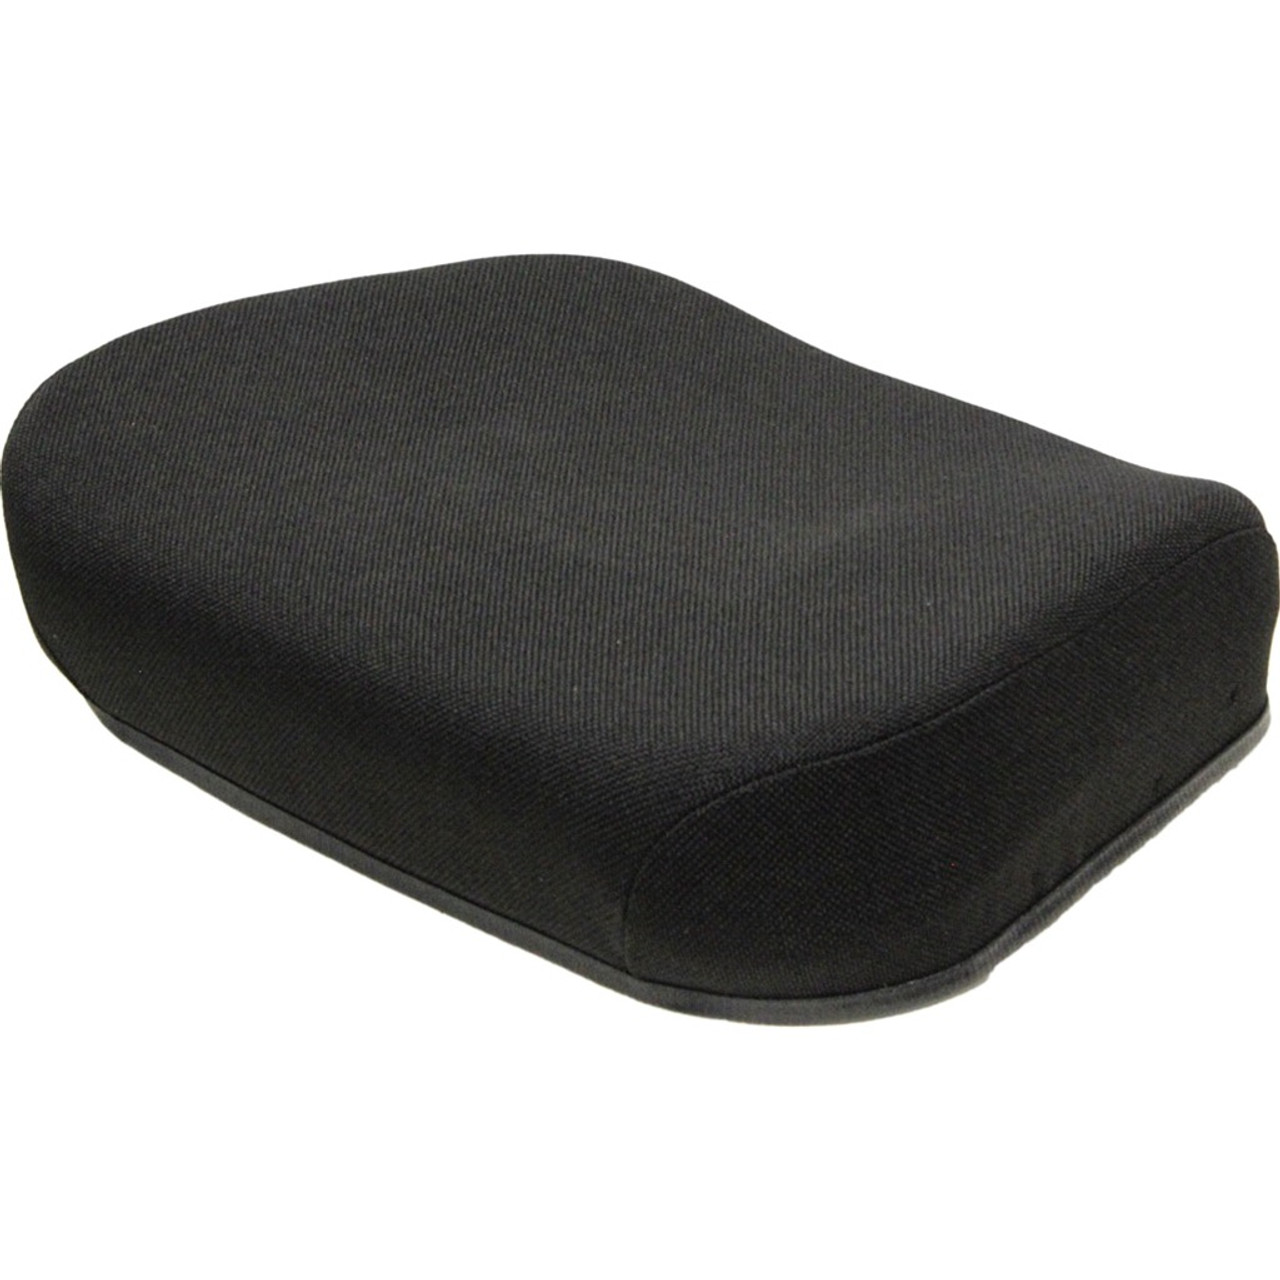 John Deere Seat Cushion Assembly - Black or Brown